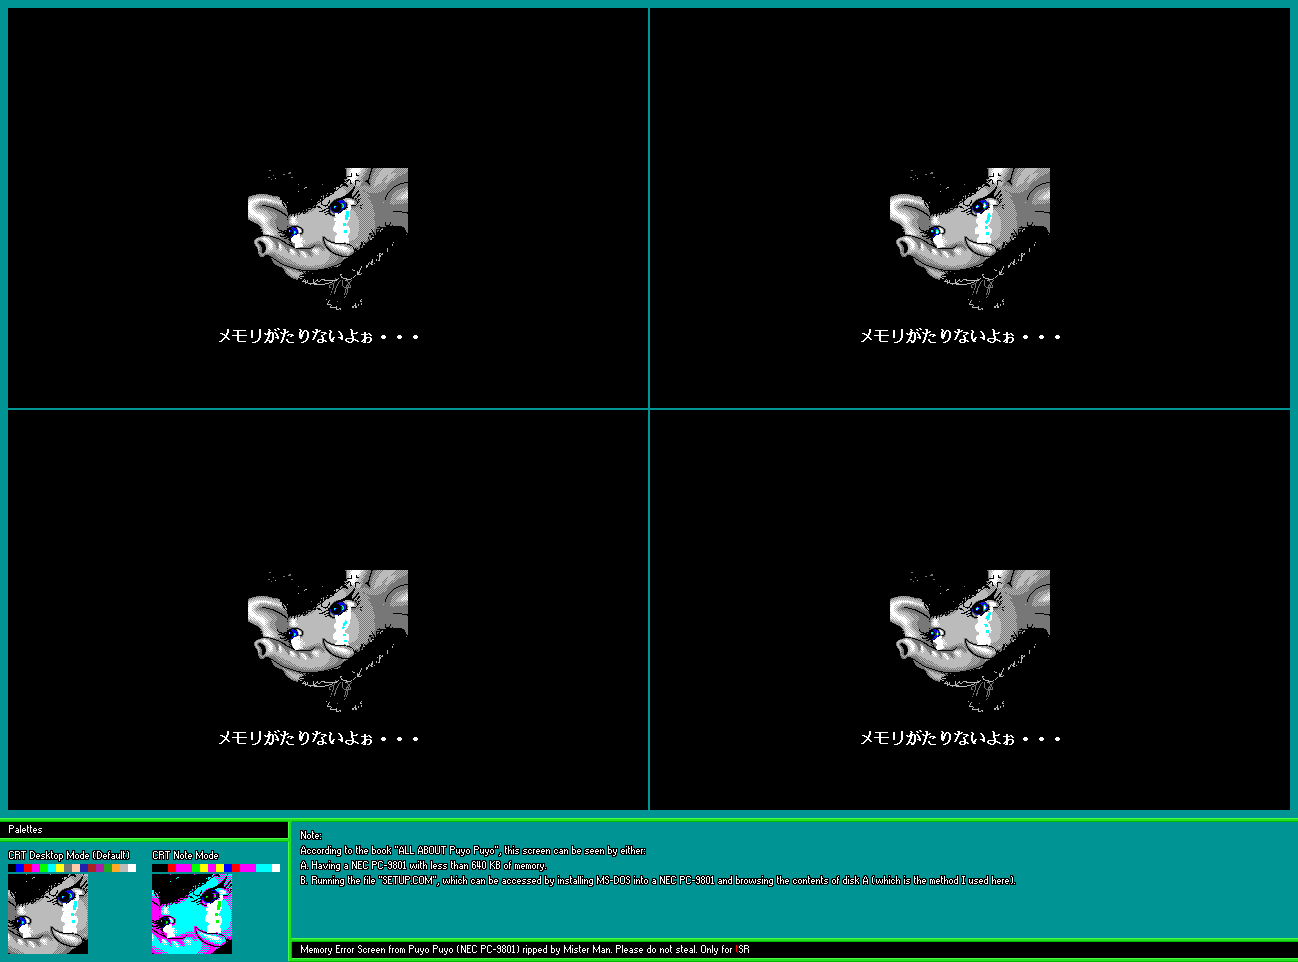 NEC PC-9801 - Puyo Puyo - Memory Error Screen - The Spriters Resource